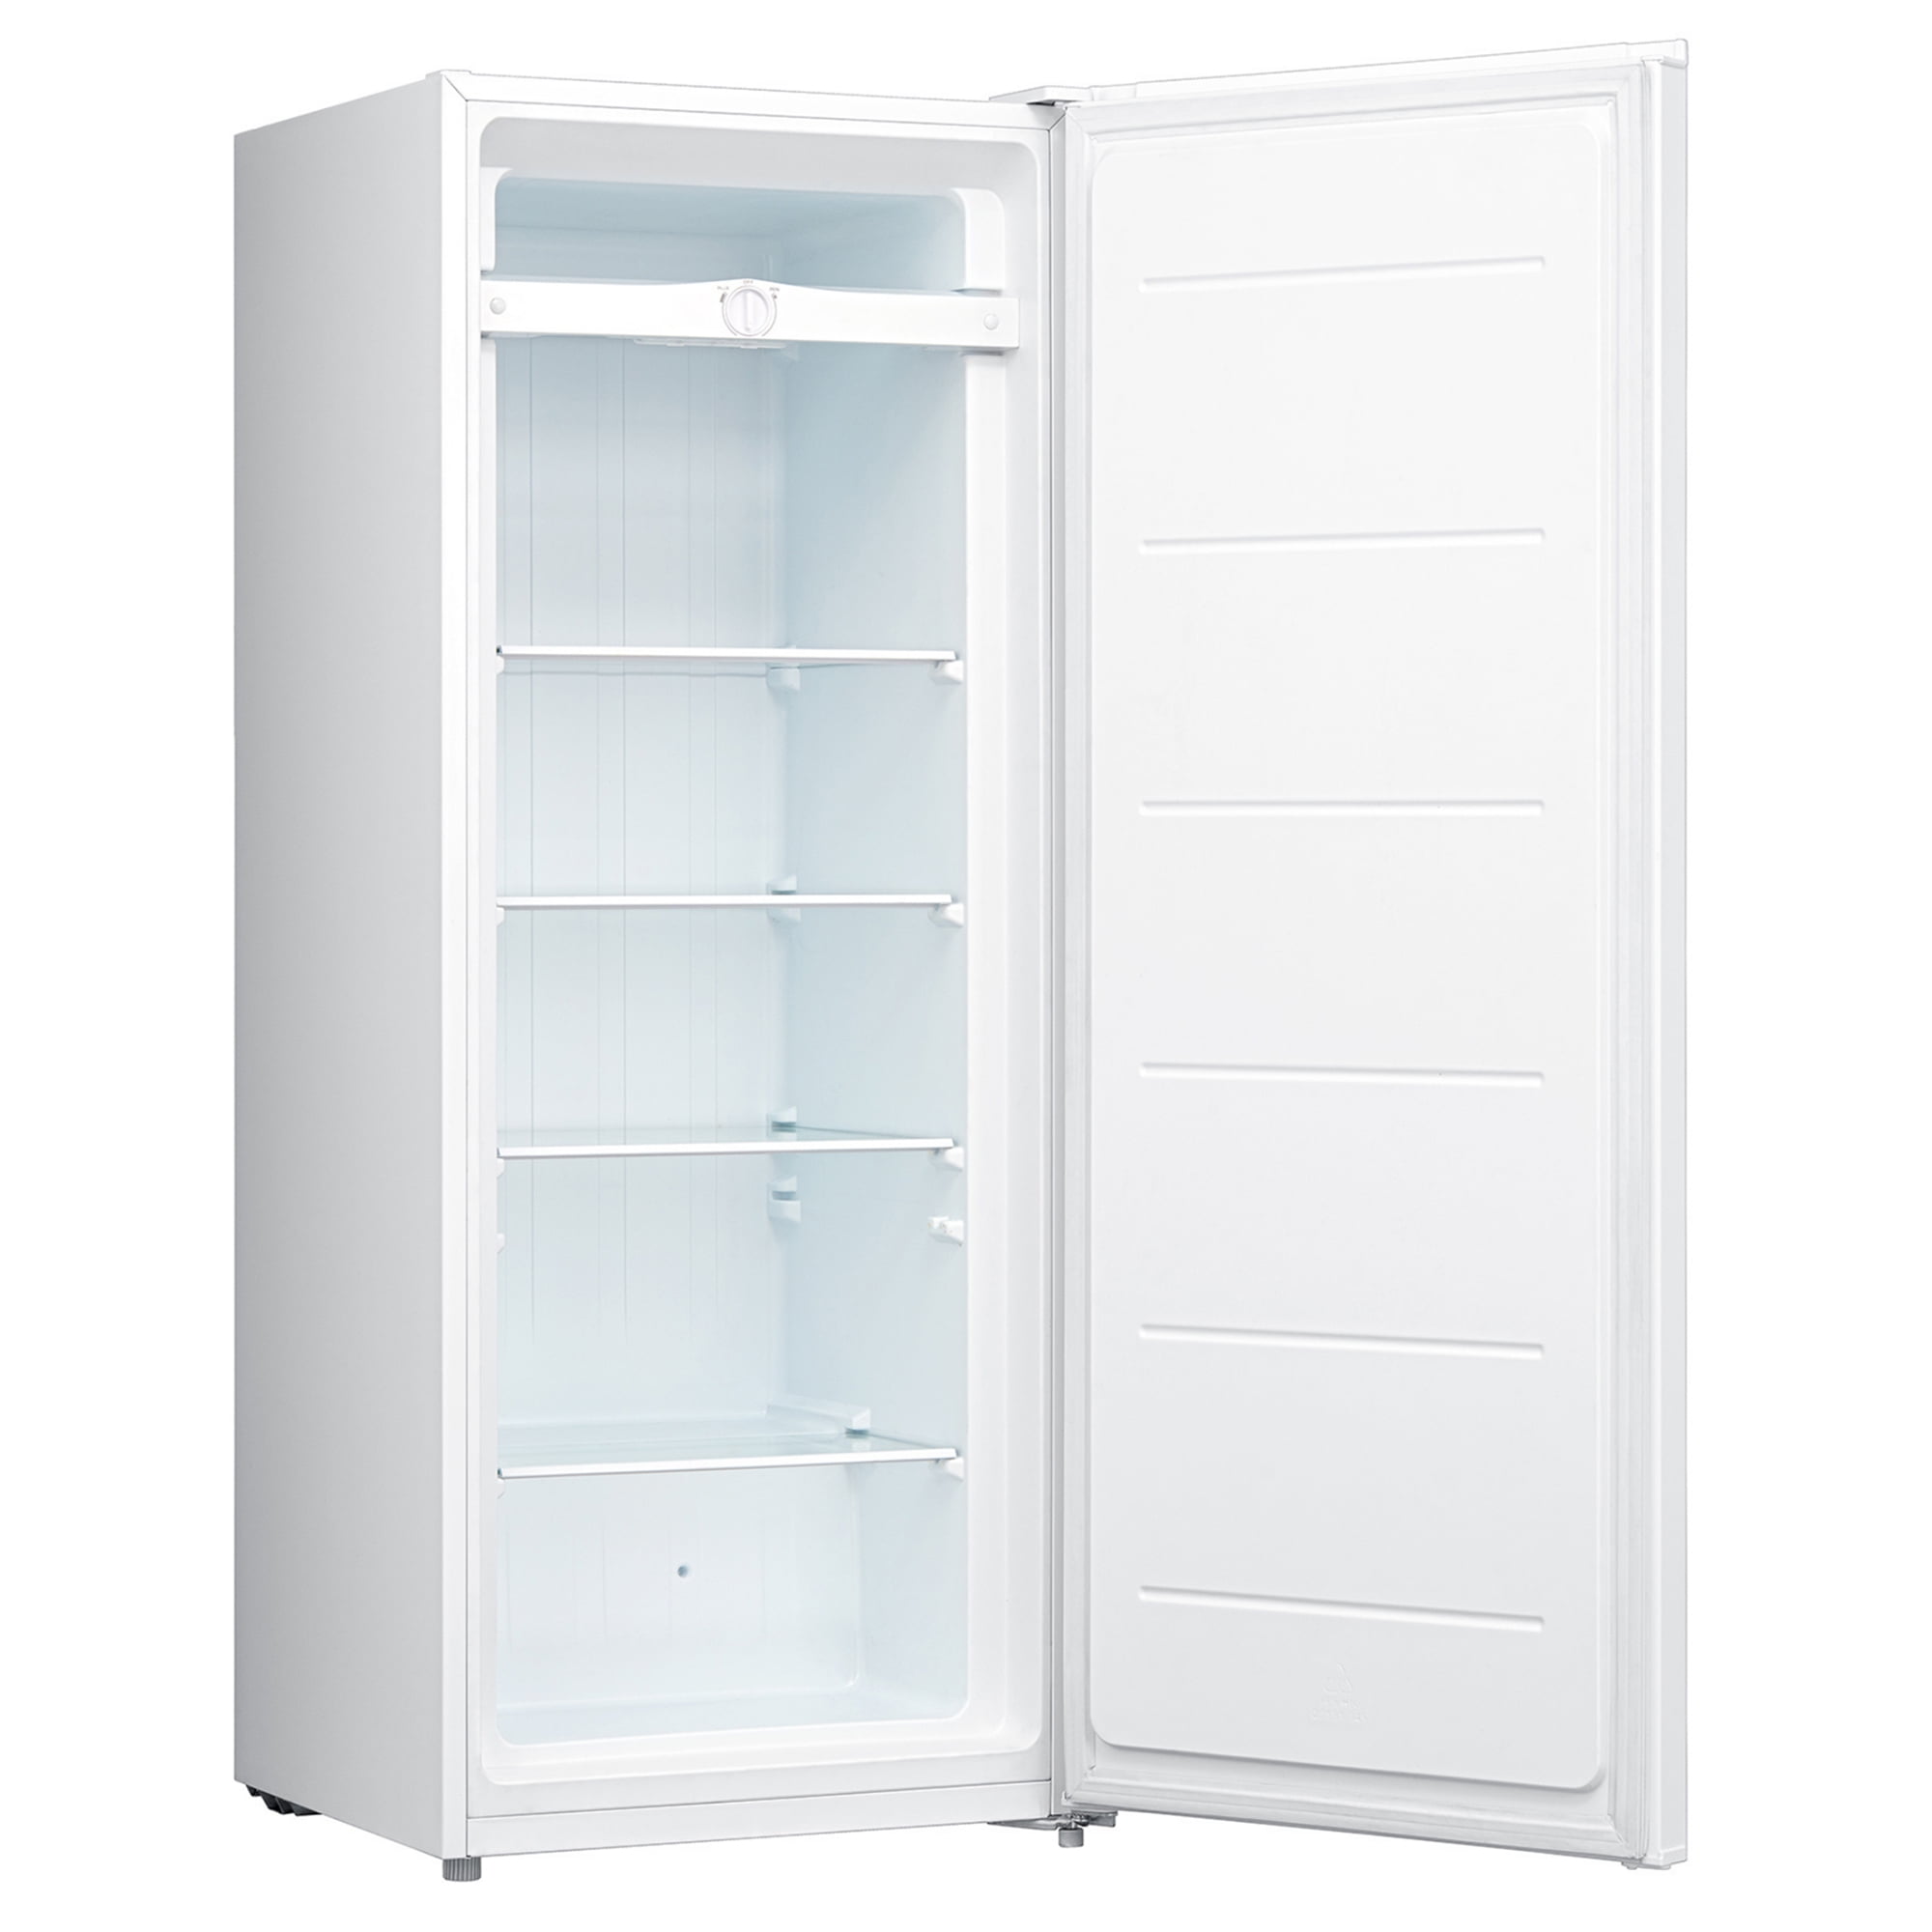 Koolatron Garage-Ready Upright Freezer, 7.0 cu ft (198L), White, Low-Frost,  Space-Saving Flat Back